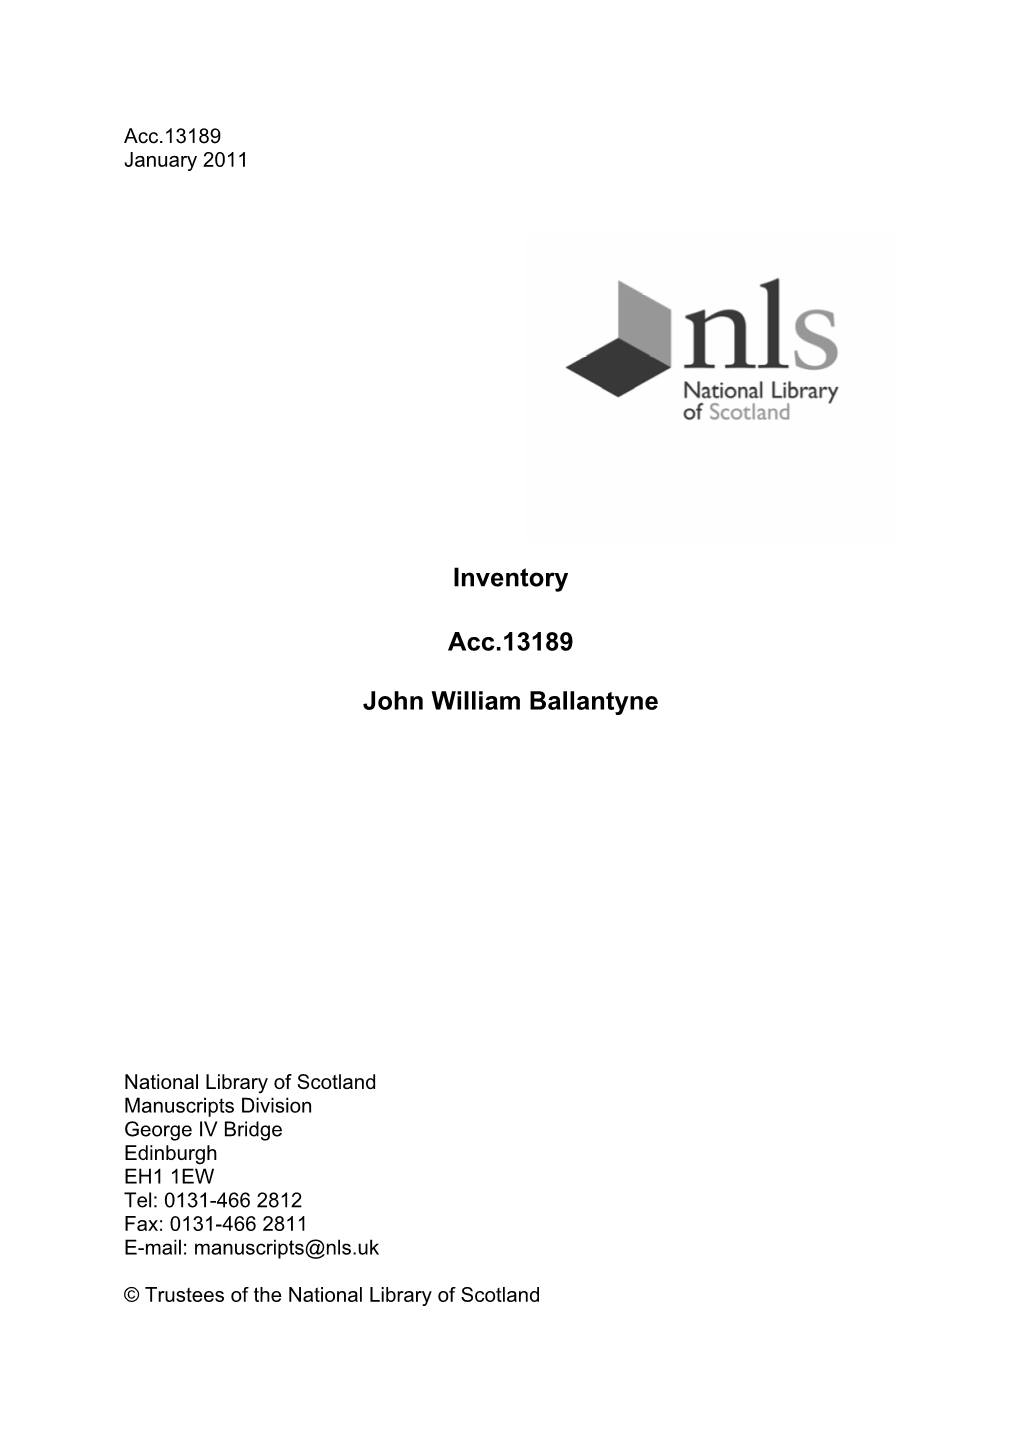 Inventory Acc.13189 John William Ballantyne